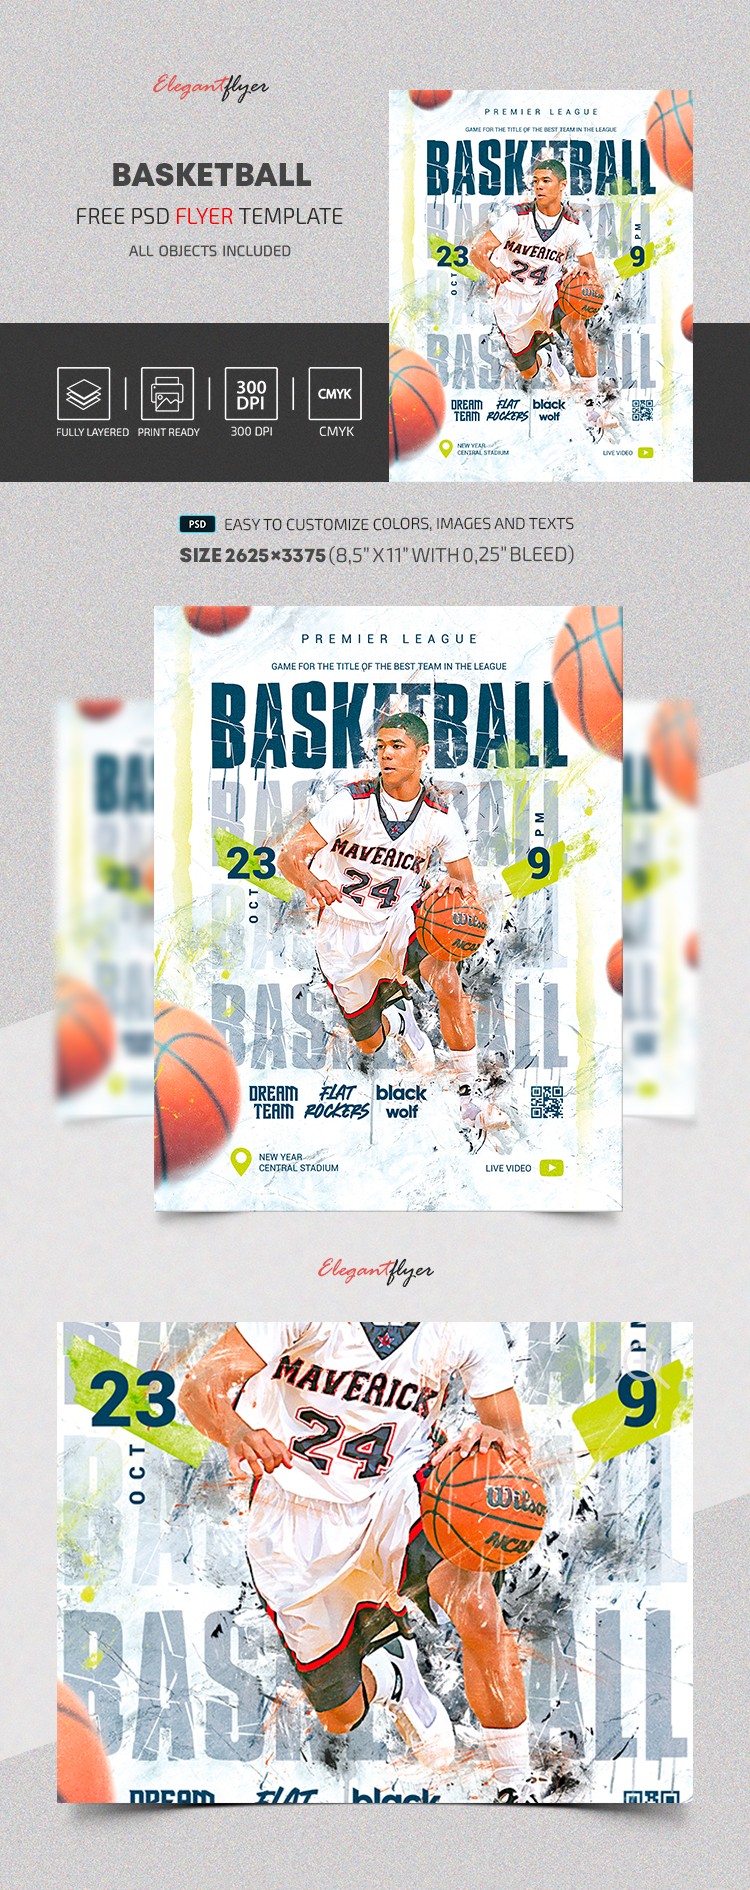 Basketball Flyer by ElegantFlyer